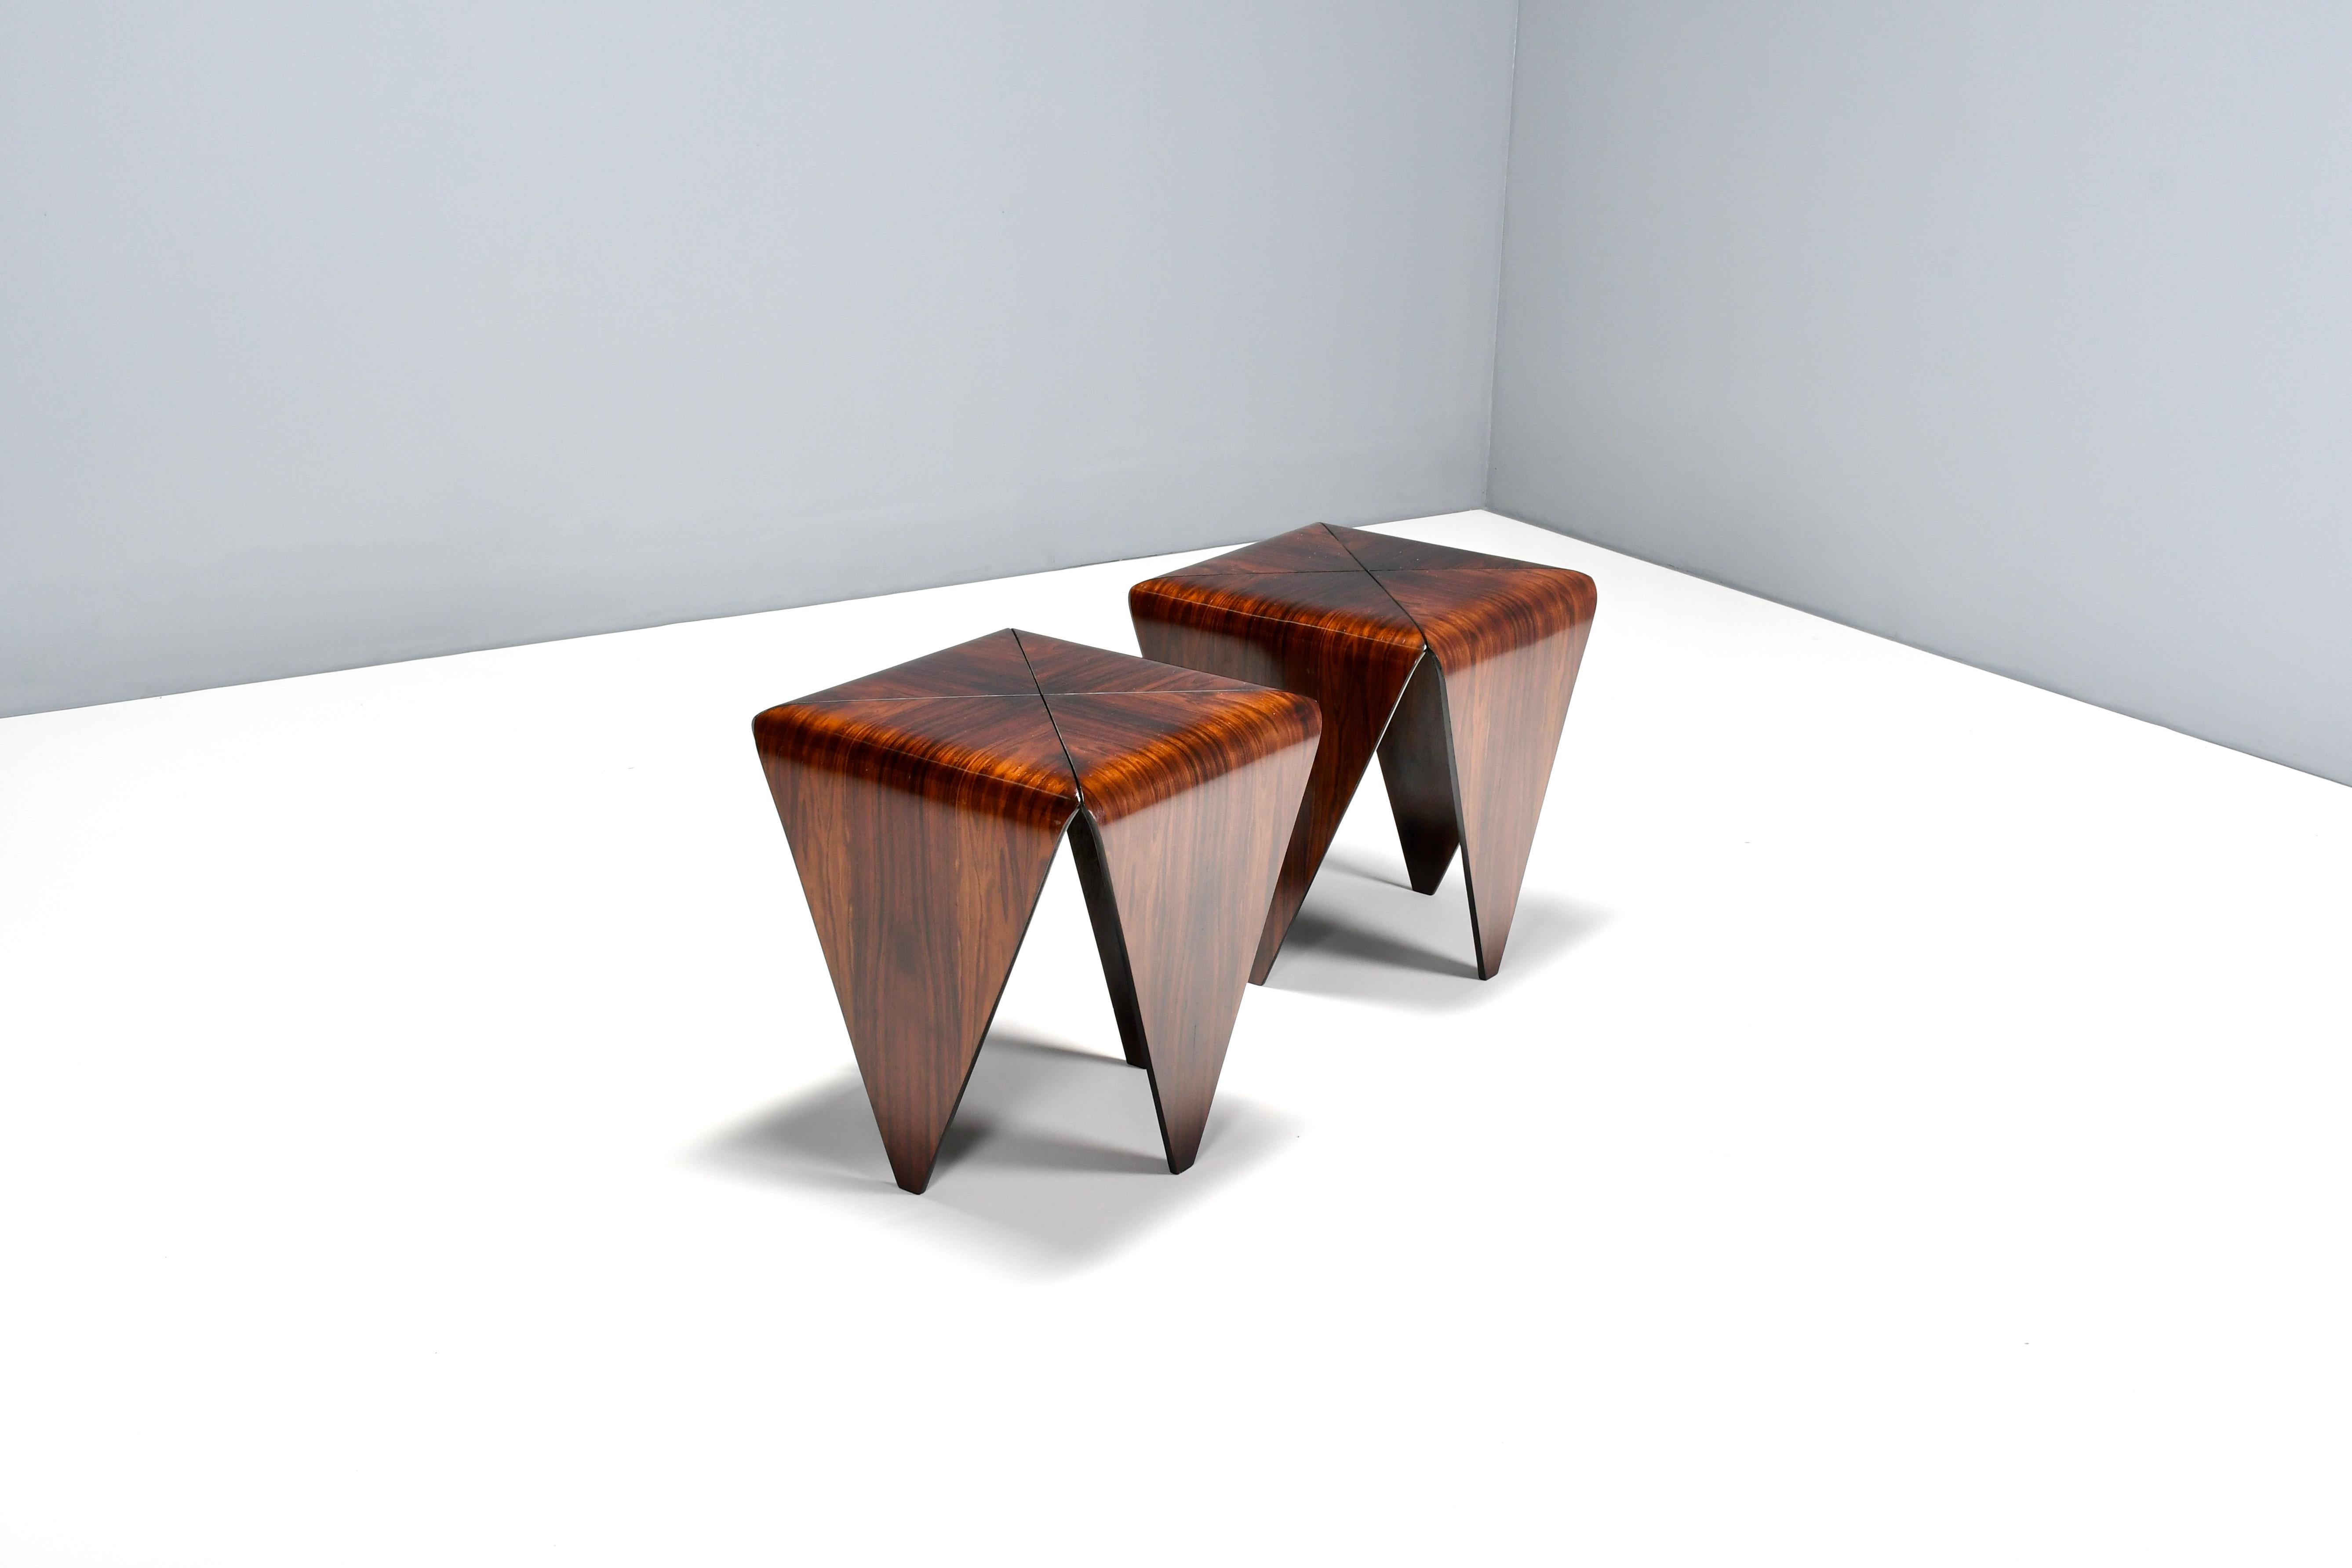 20th Century Set of Two Jorge Zalszupin Petalas Tables by L’atelier, Brazil, 1959